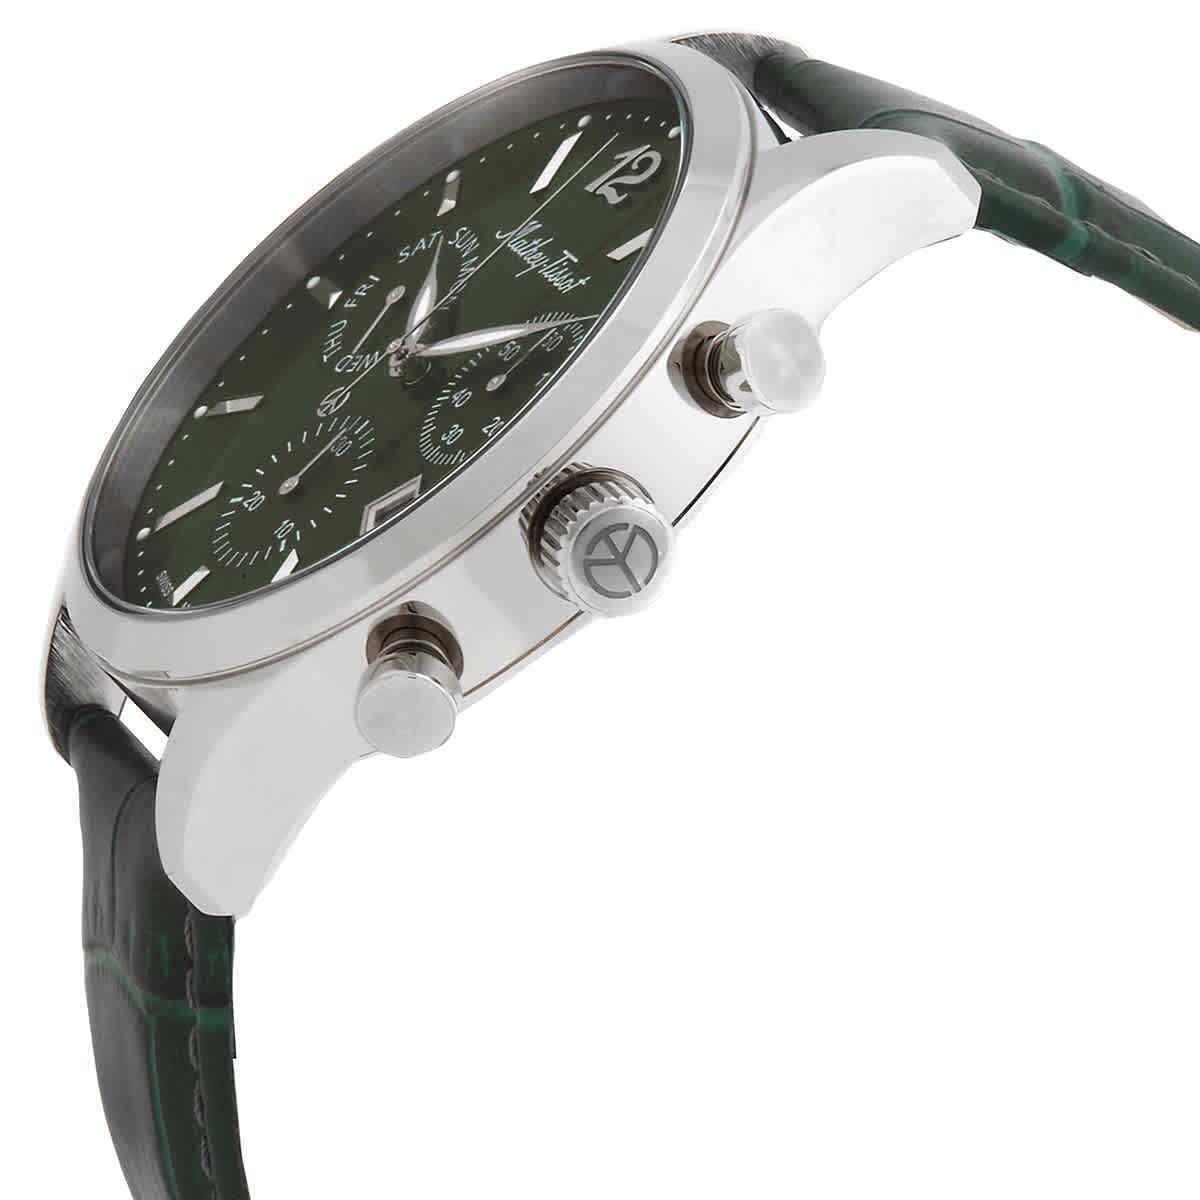 Mathey-tissot Urban Chrono Chronograph Quartz Green Dial Men`s Watch H411CHALV - Dial: Green, Band: Green, Bezel: Silver-tone